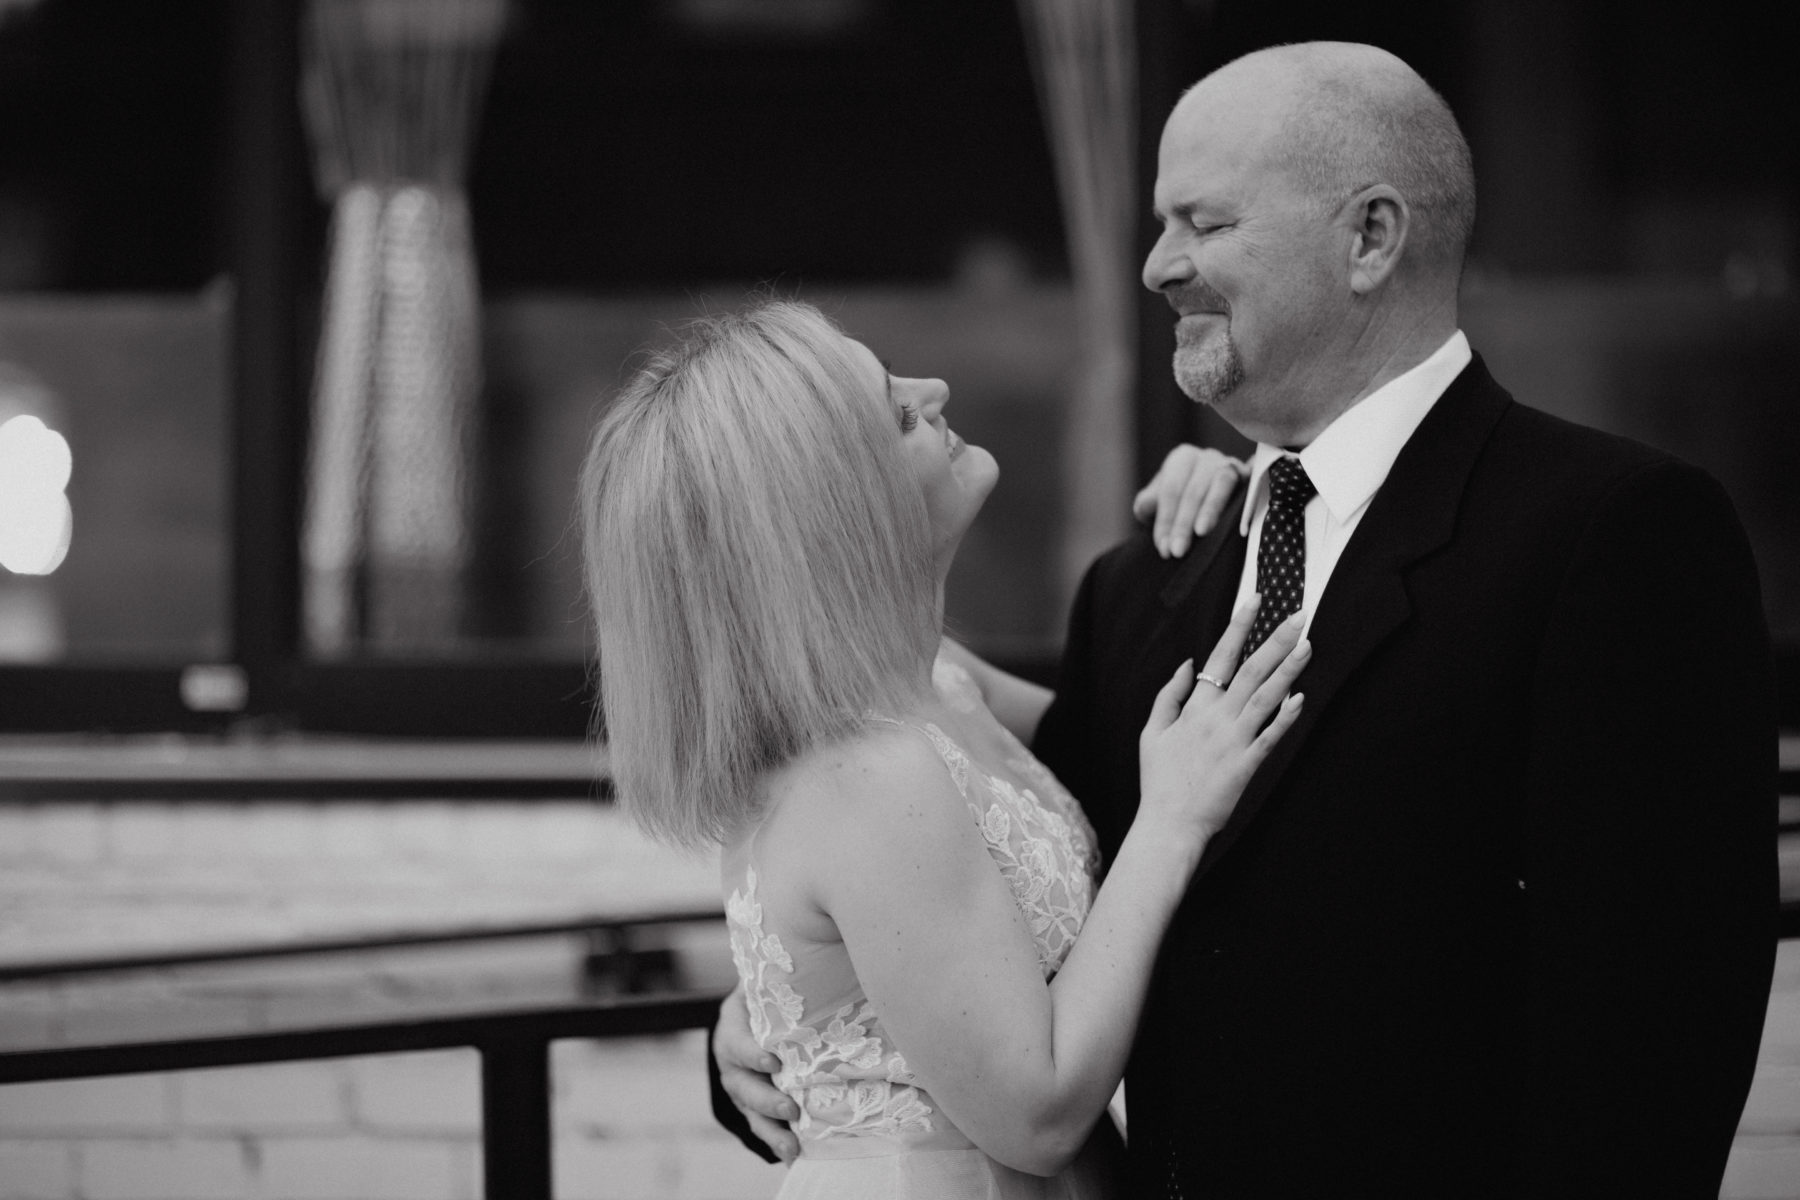 Father daughter wedding photos: Nashville brunch elopement featured on Nashville Bride Guide